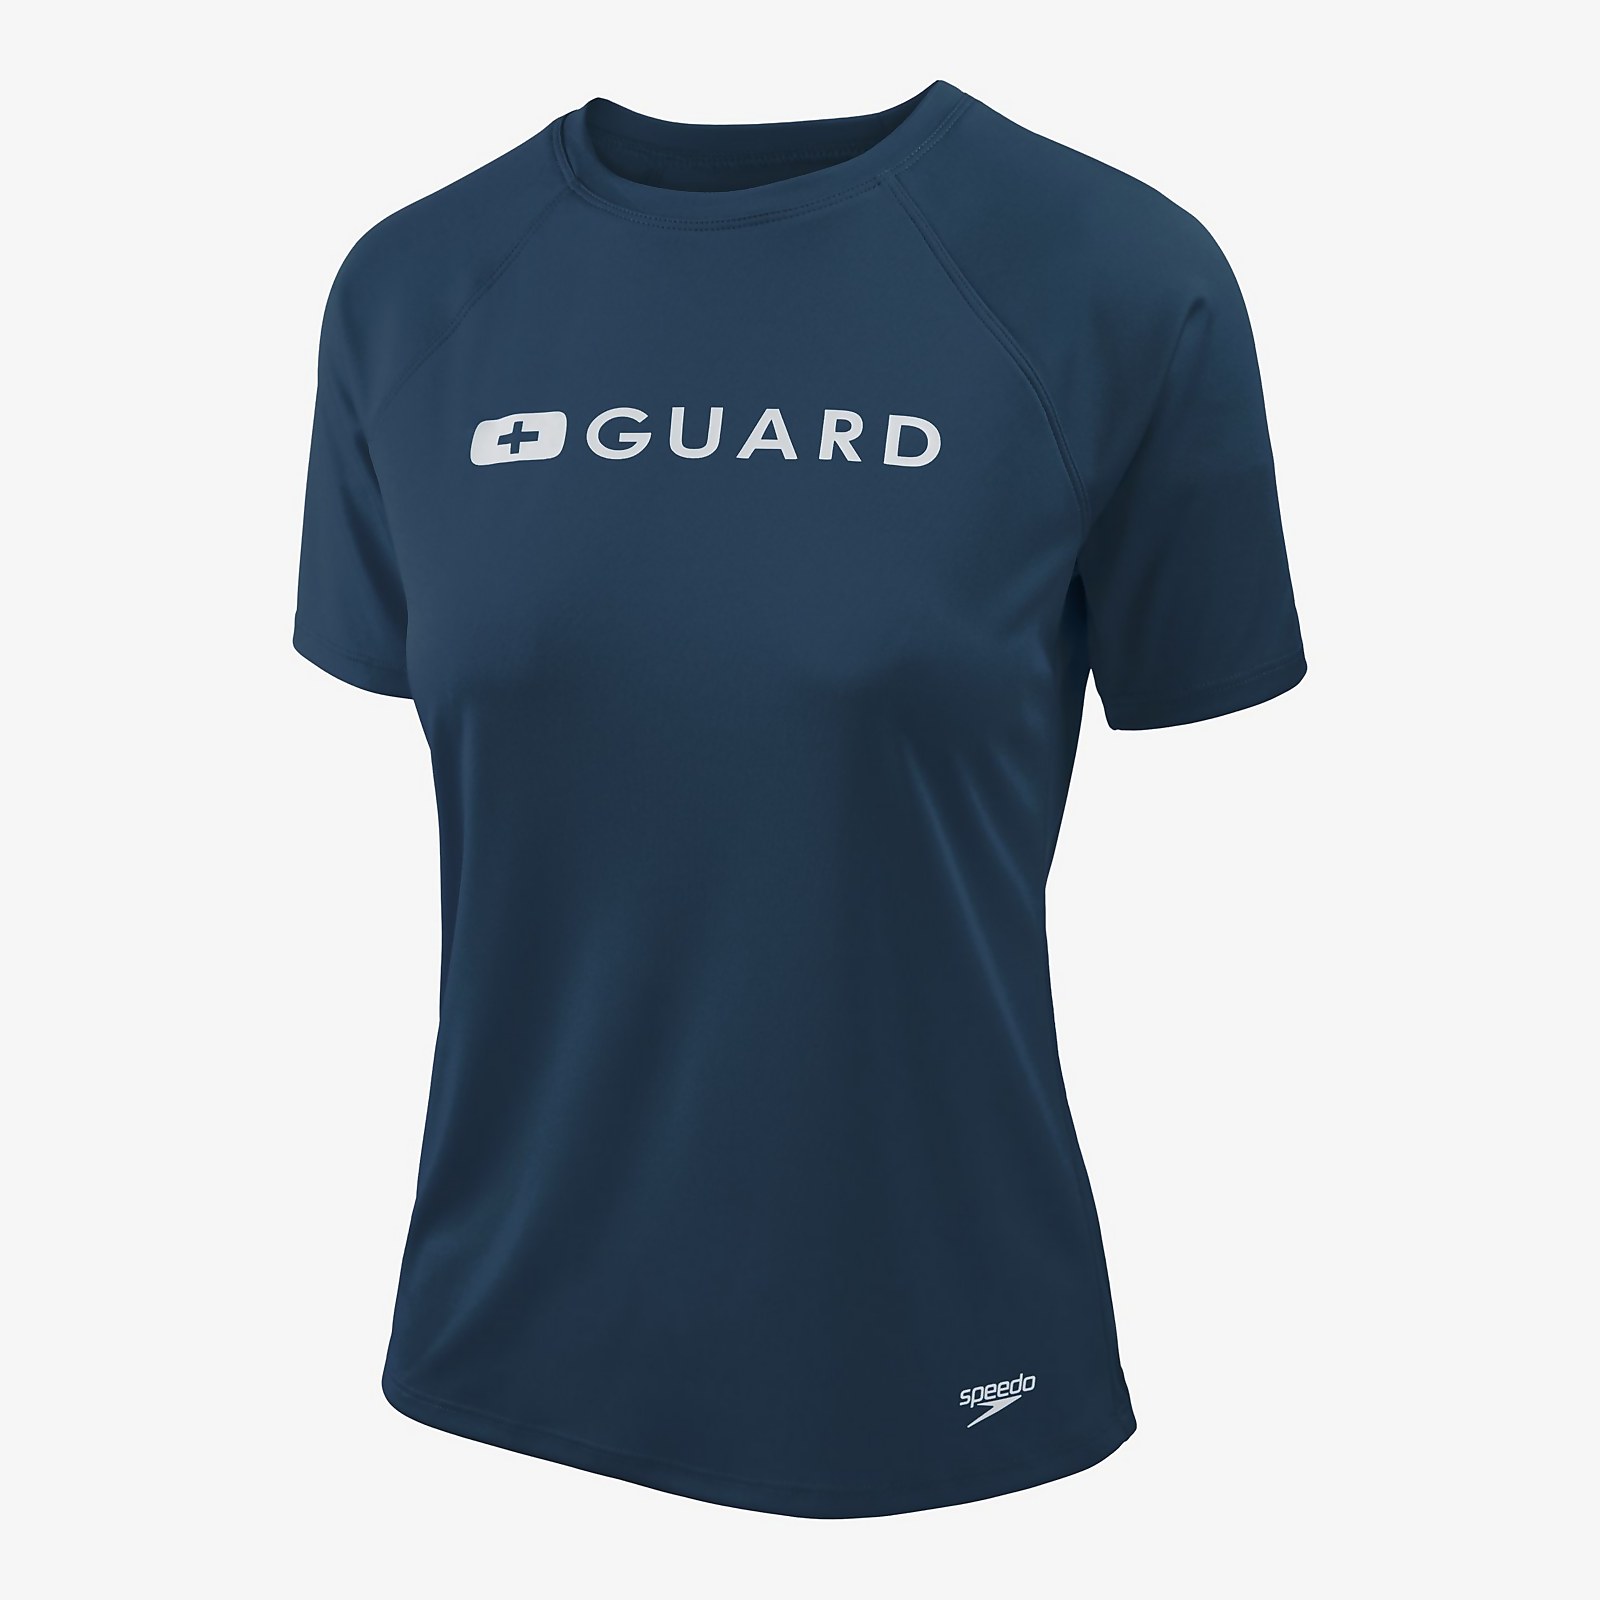 Speedo  Guard Short Sleeve Solid Swim Tee - M    : Navy